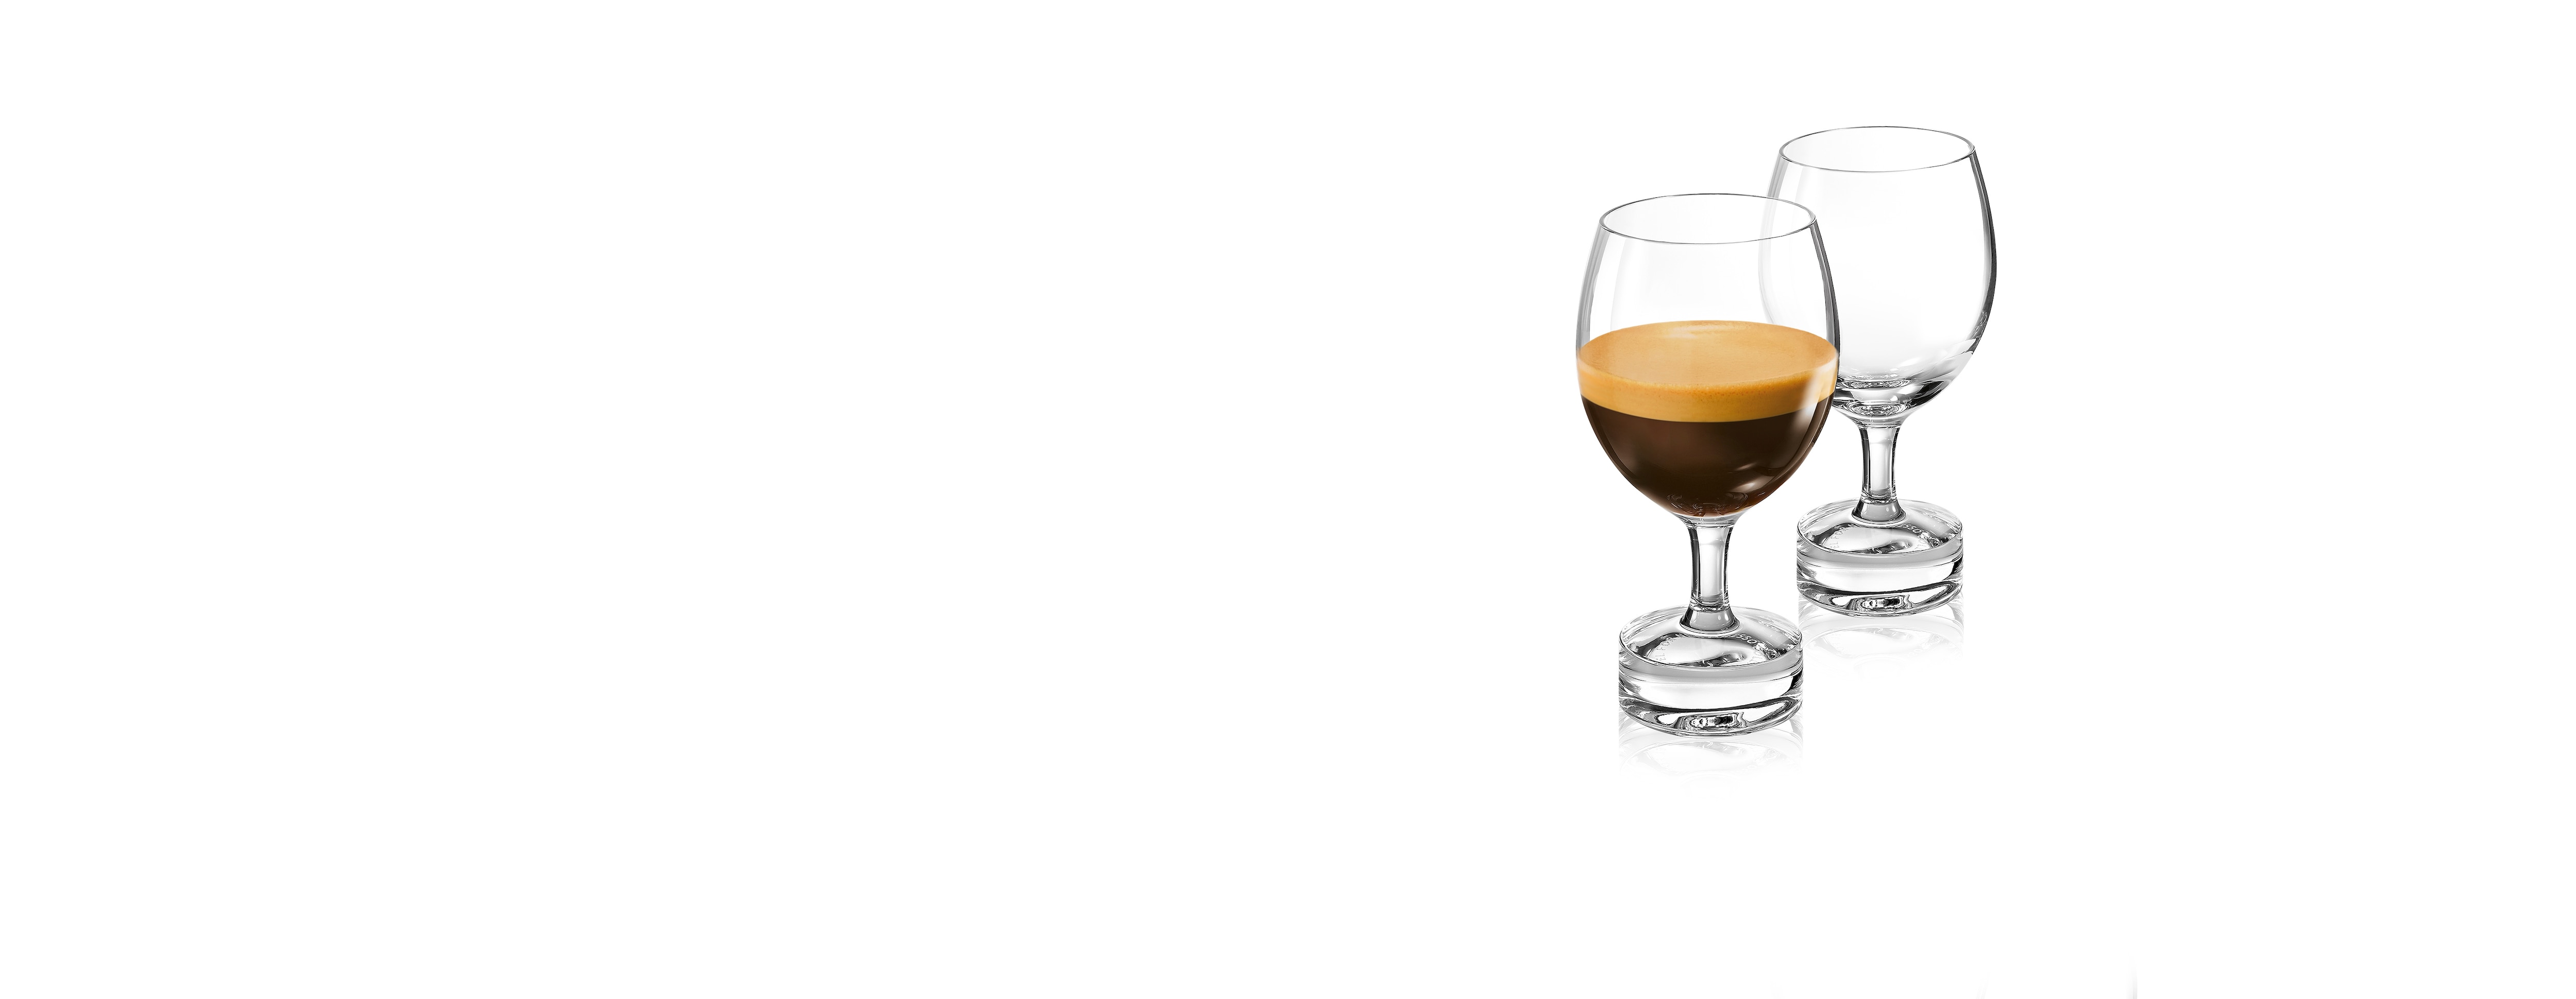 Riedel Nespresso glasses - Global Coffee Report